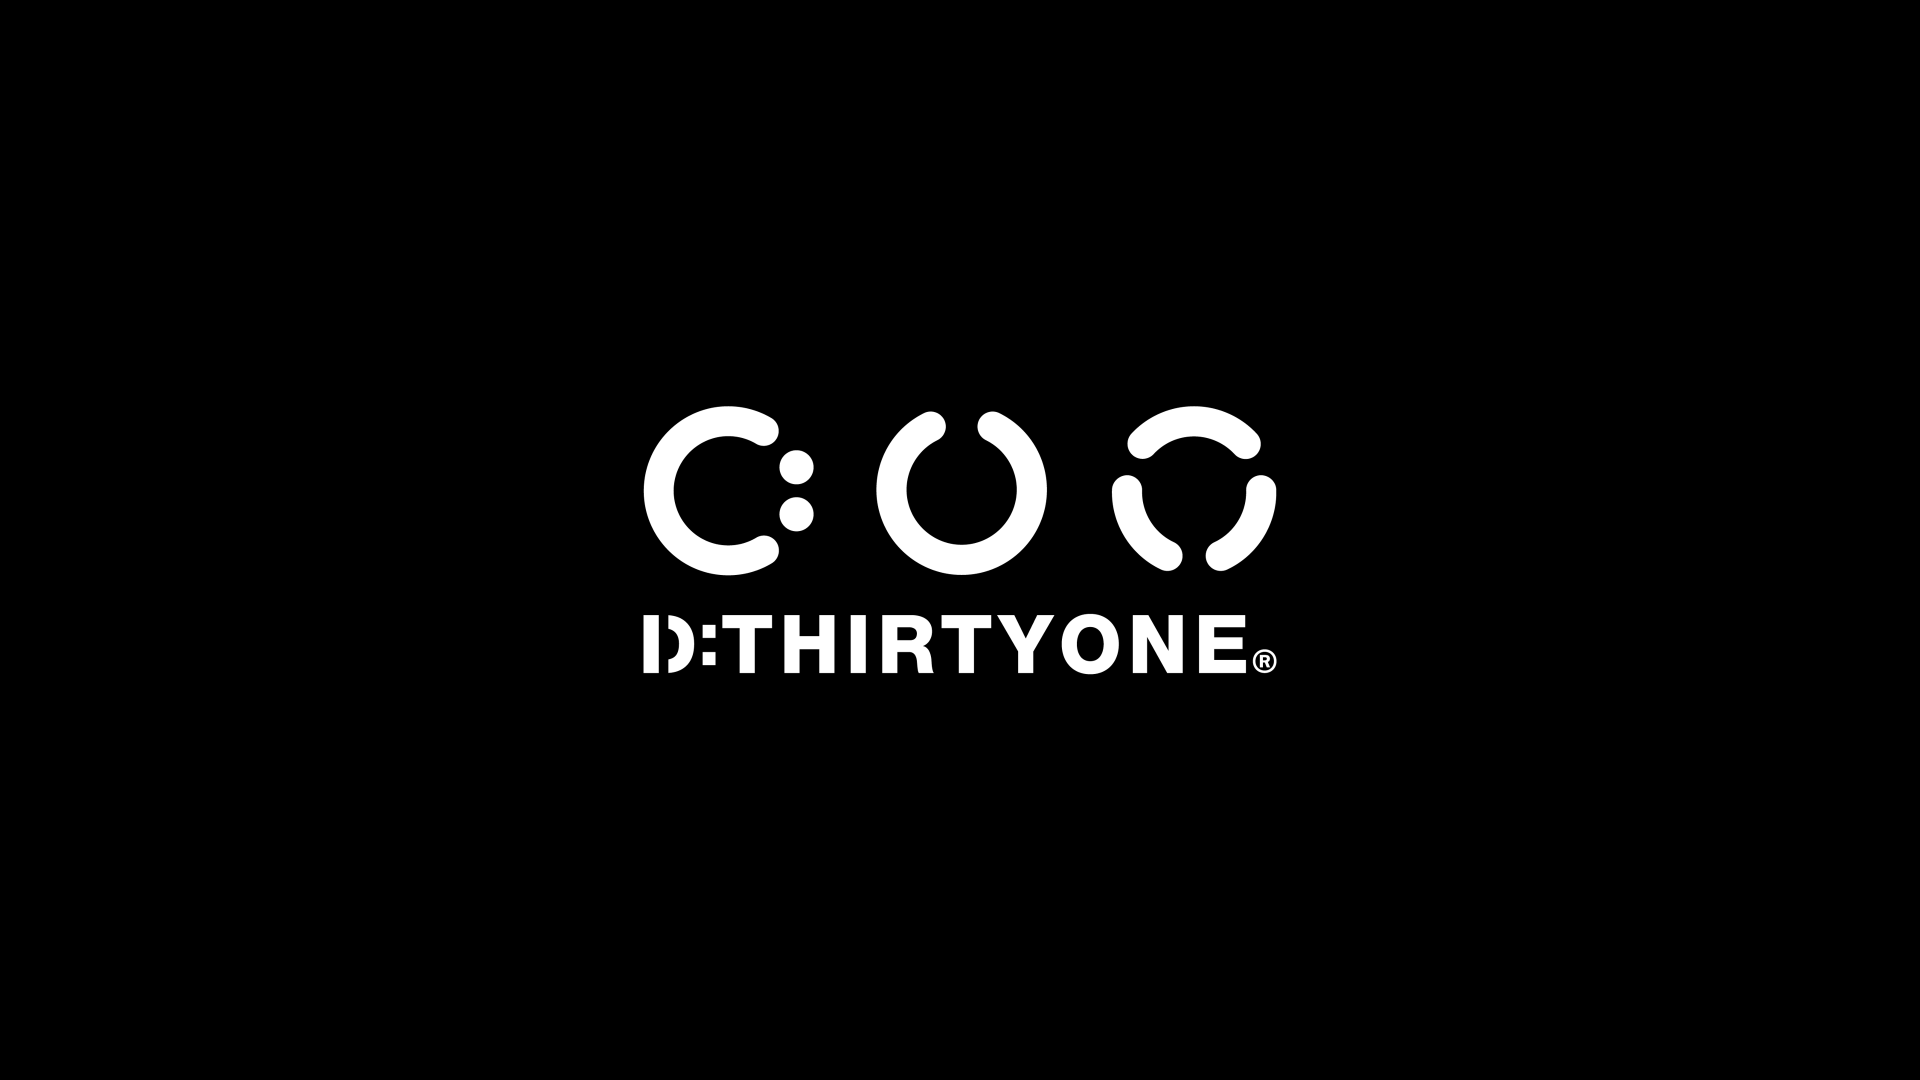 Thirty-One Logo